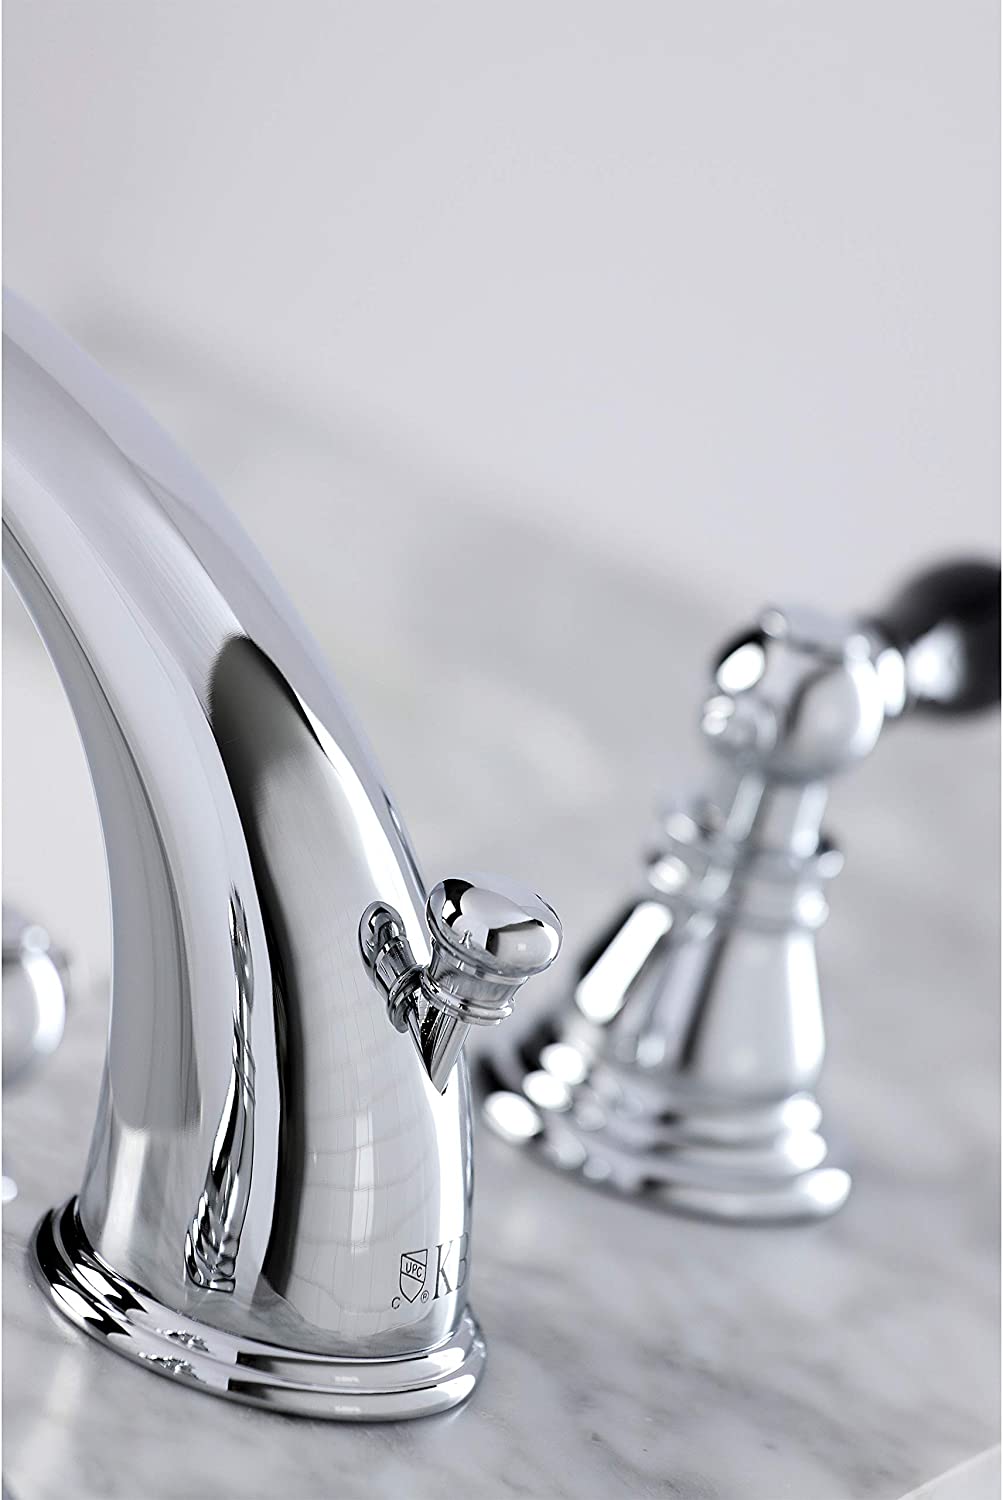 Kingston Brass KB961AKL Duchess Widespread Bathroom Faucet, Polished Chrome